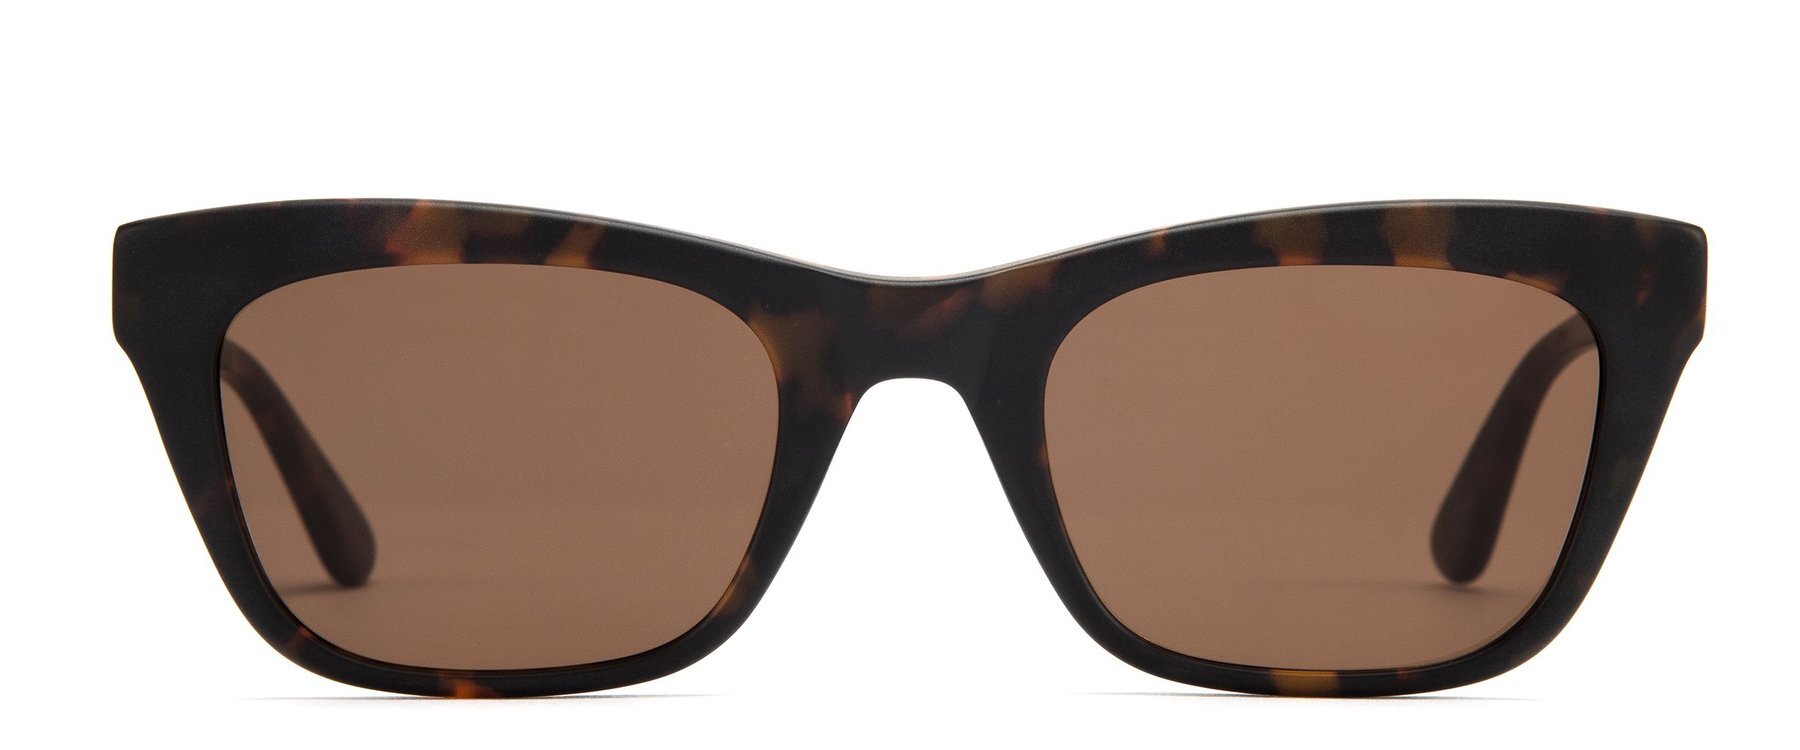 Otis Lyla Polarized Sunglasses Matte Havana Tort Brown CatEye